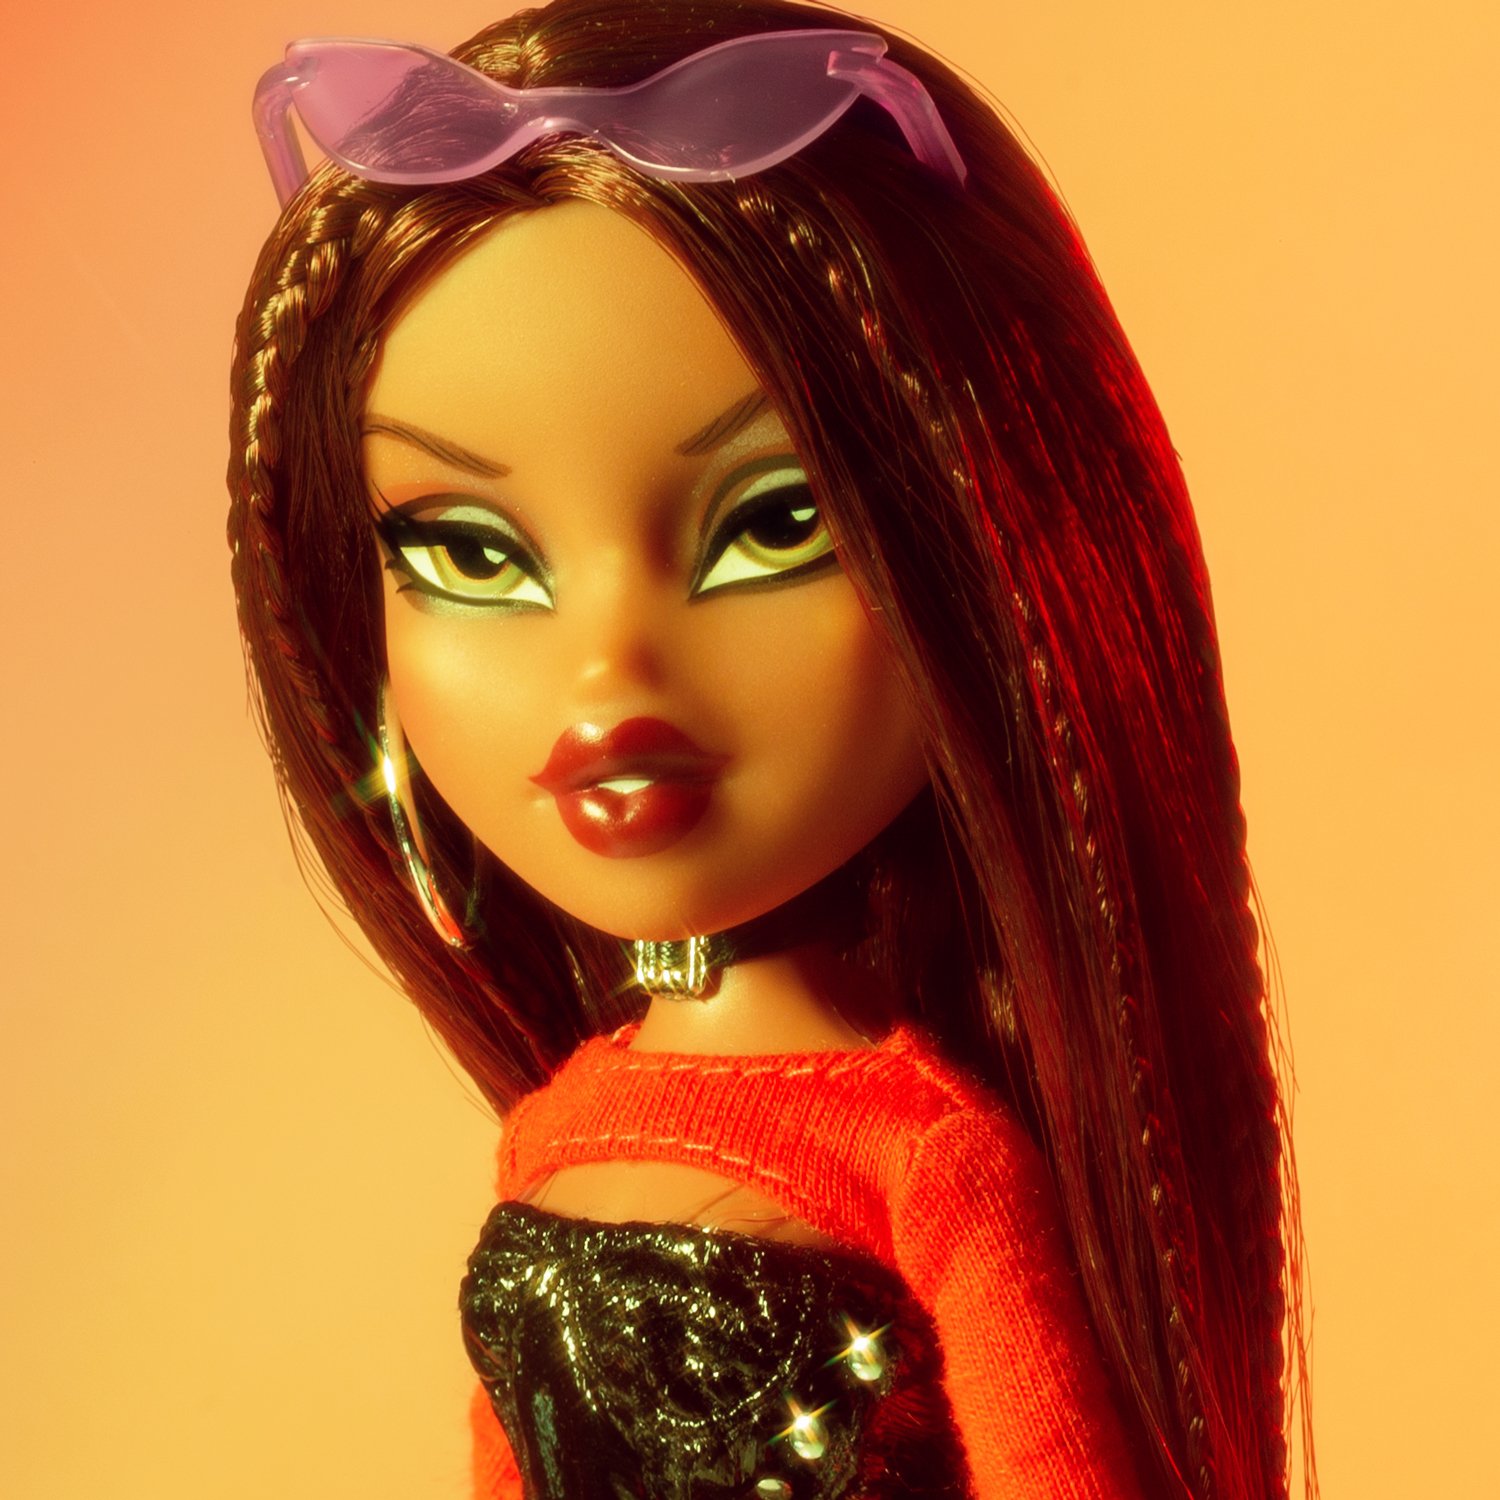 How Bratz Dolls Influenced Gen-Z Fashion And Beauty Standards